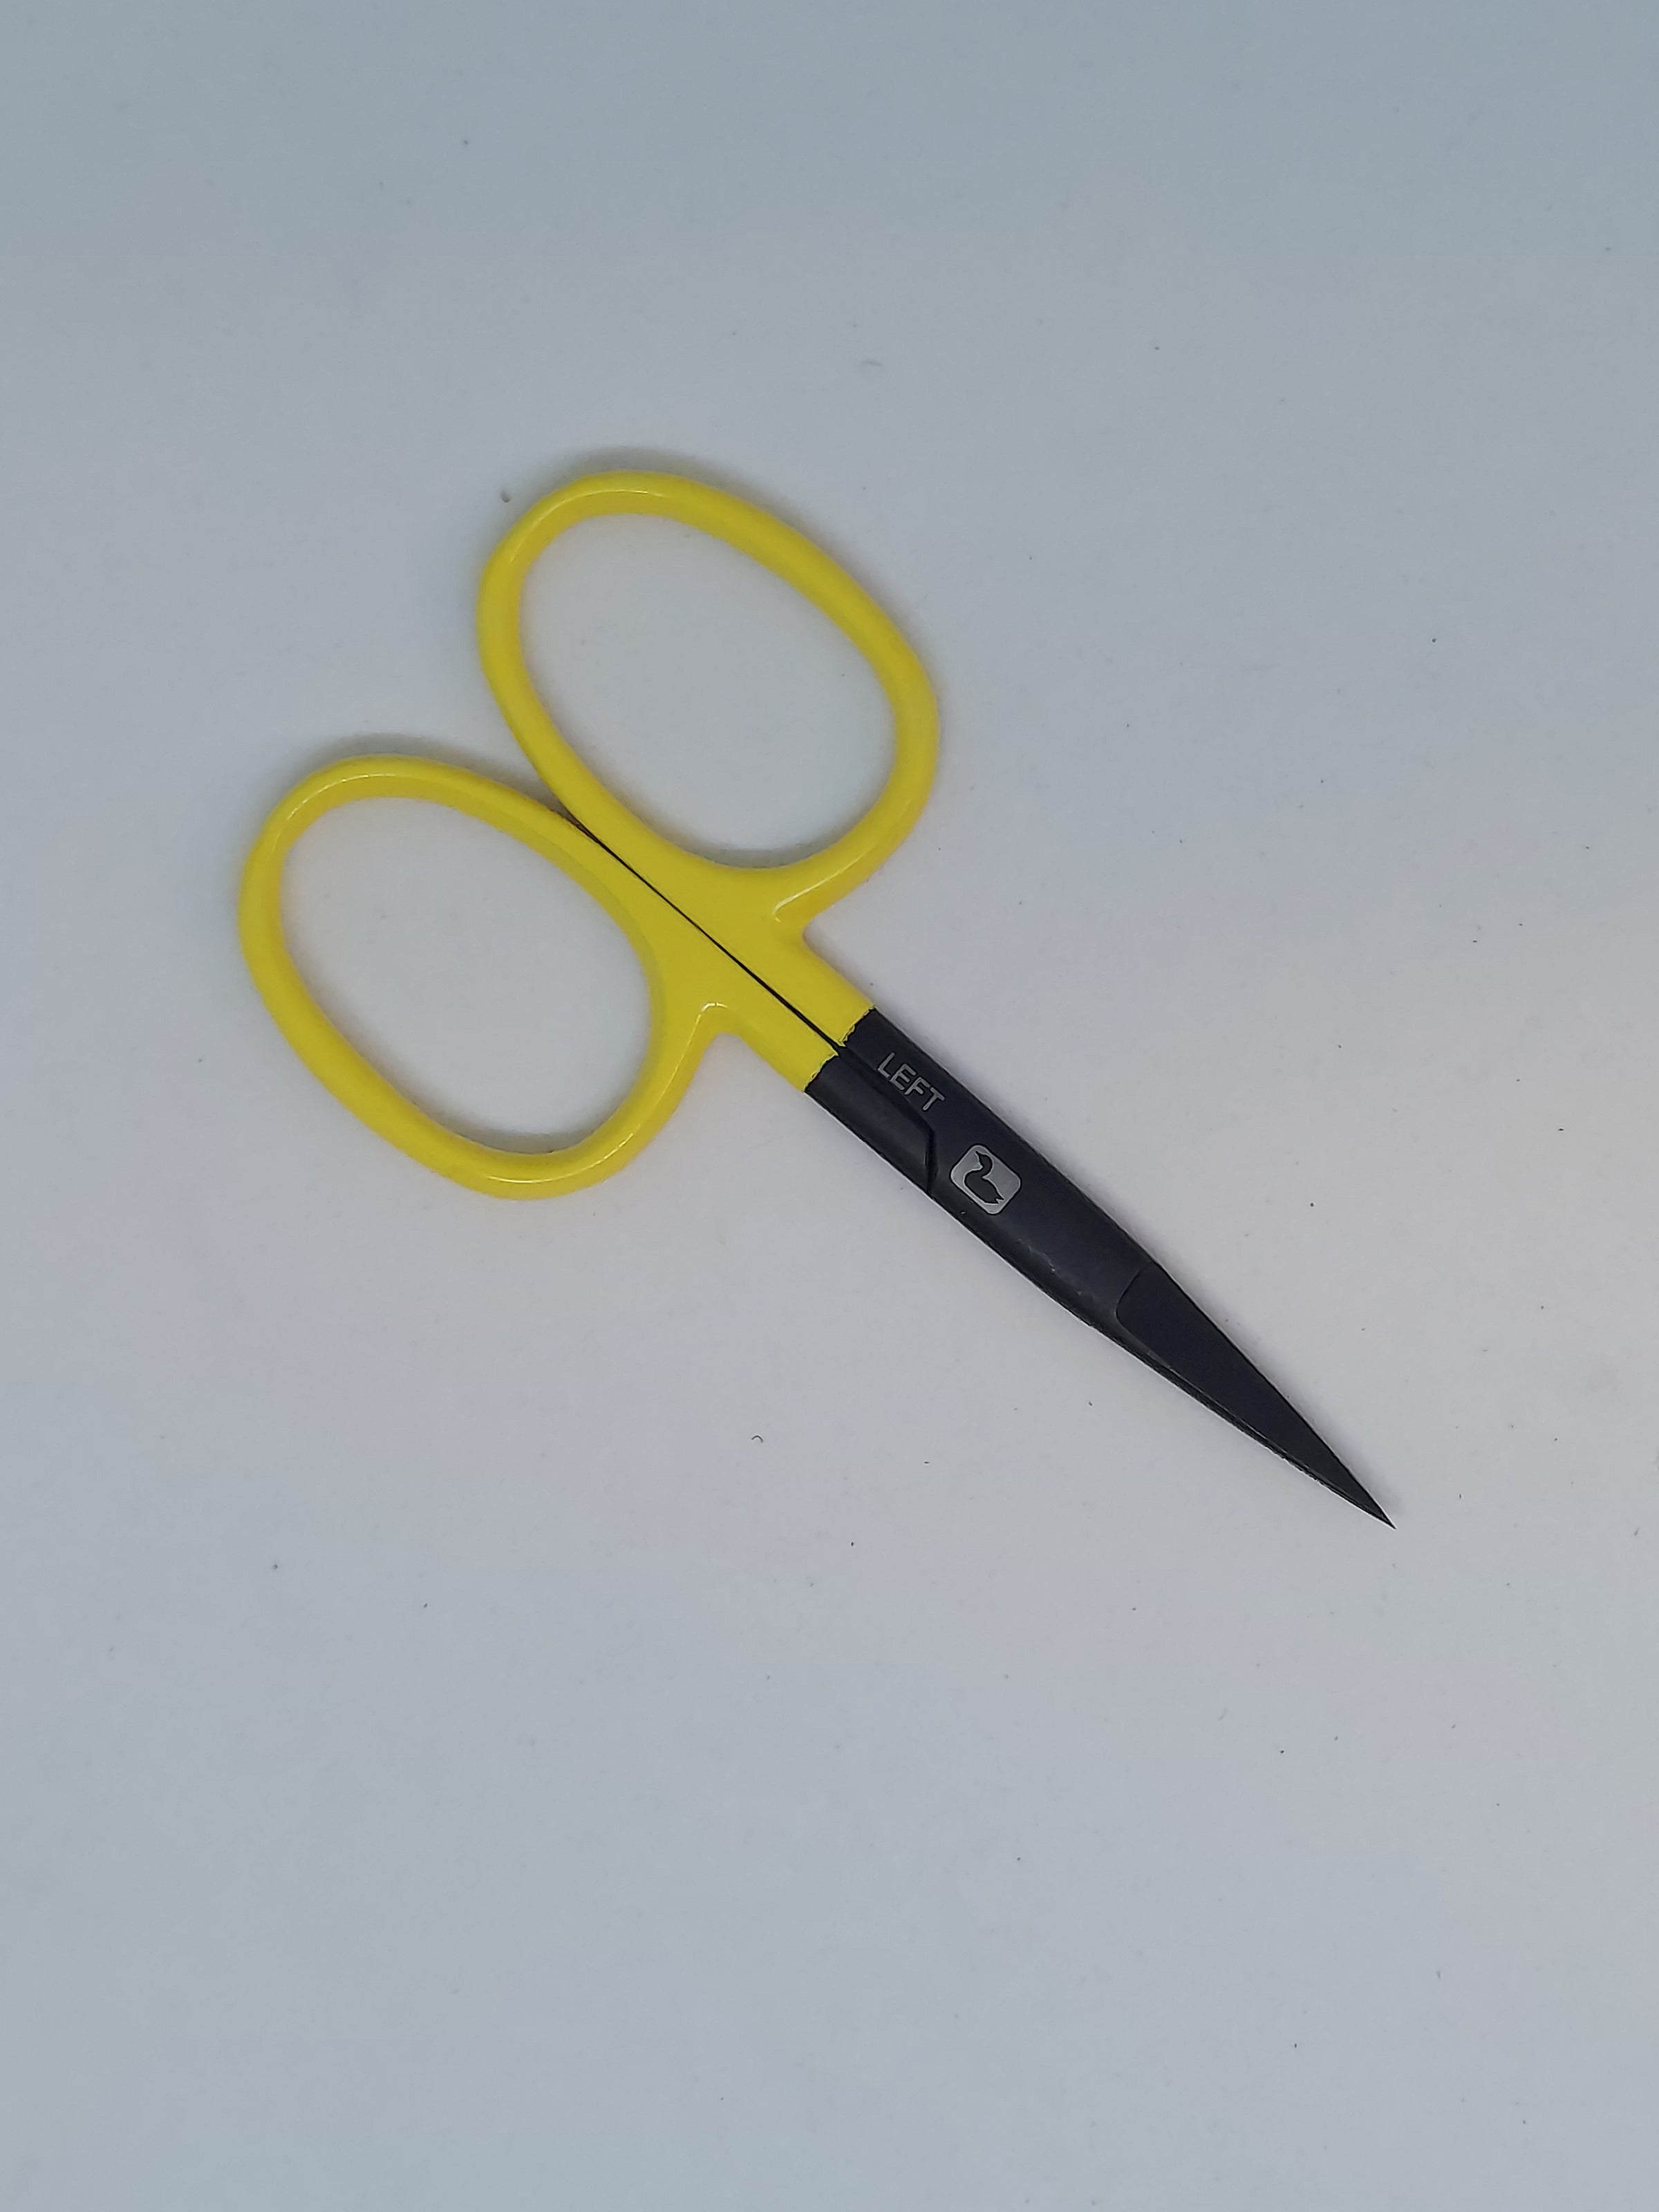 Loon Ergo All-Purpose Fly-Tying Scissors